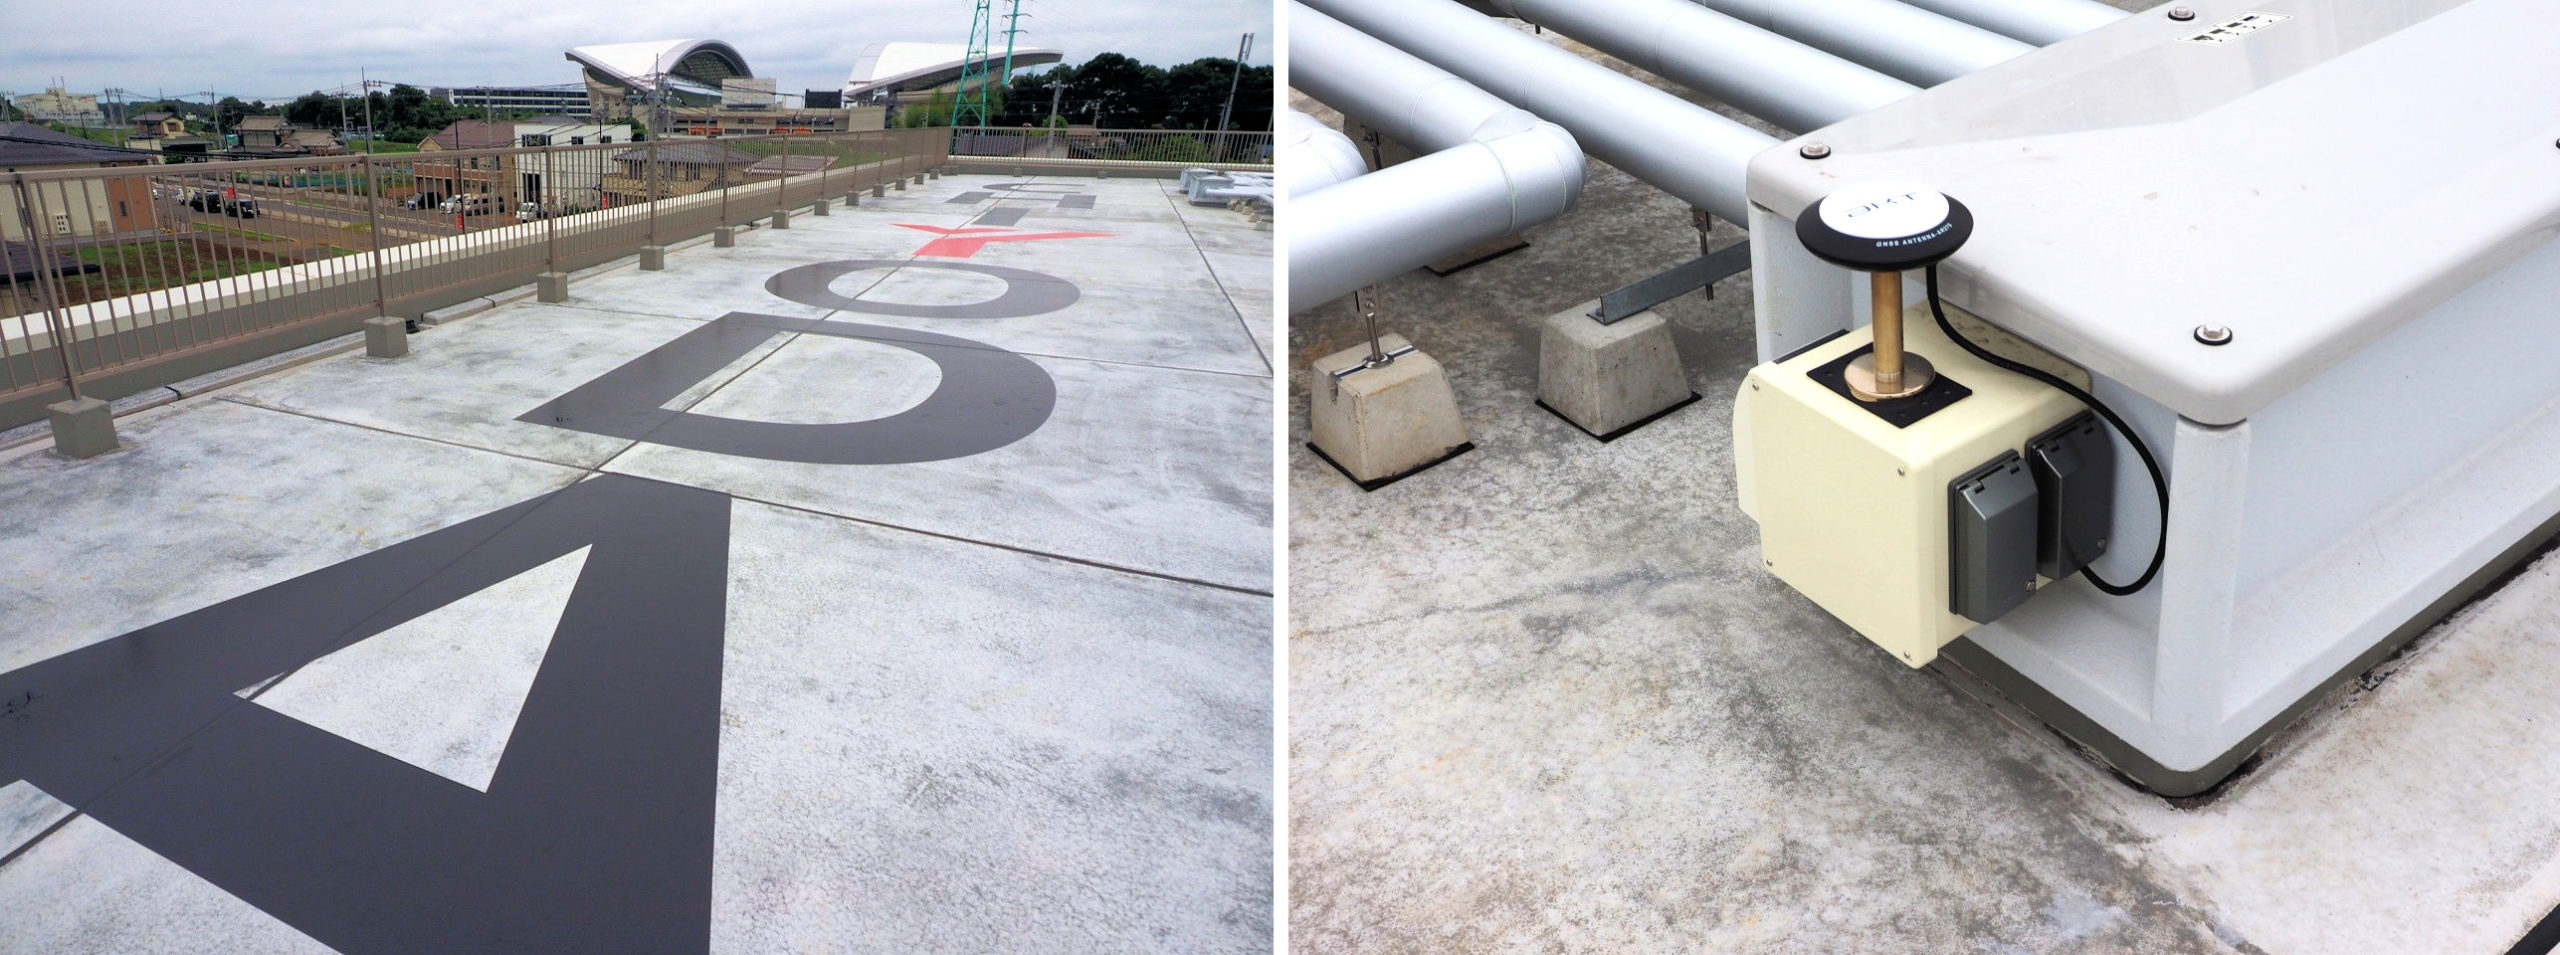 GNSS測量機による実習も行える屋上（左）。建物内にGNSS環境を構築するためのアンテナ（右）